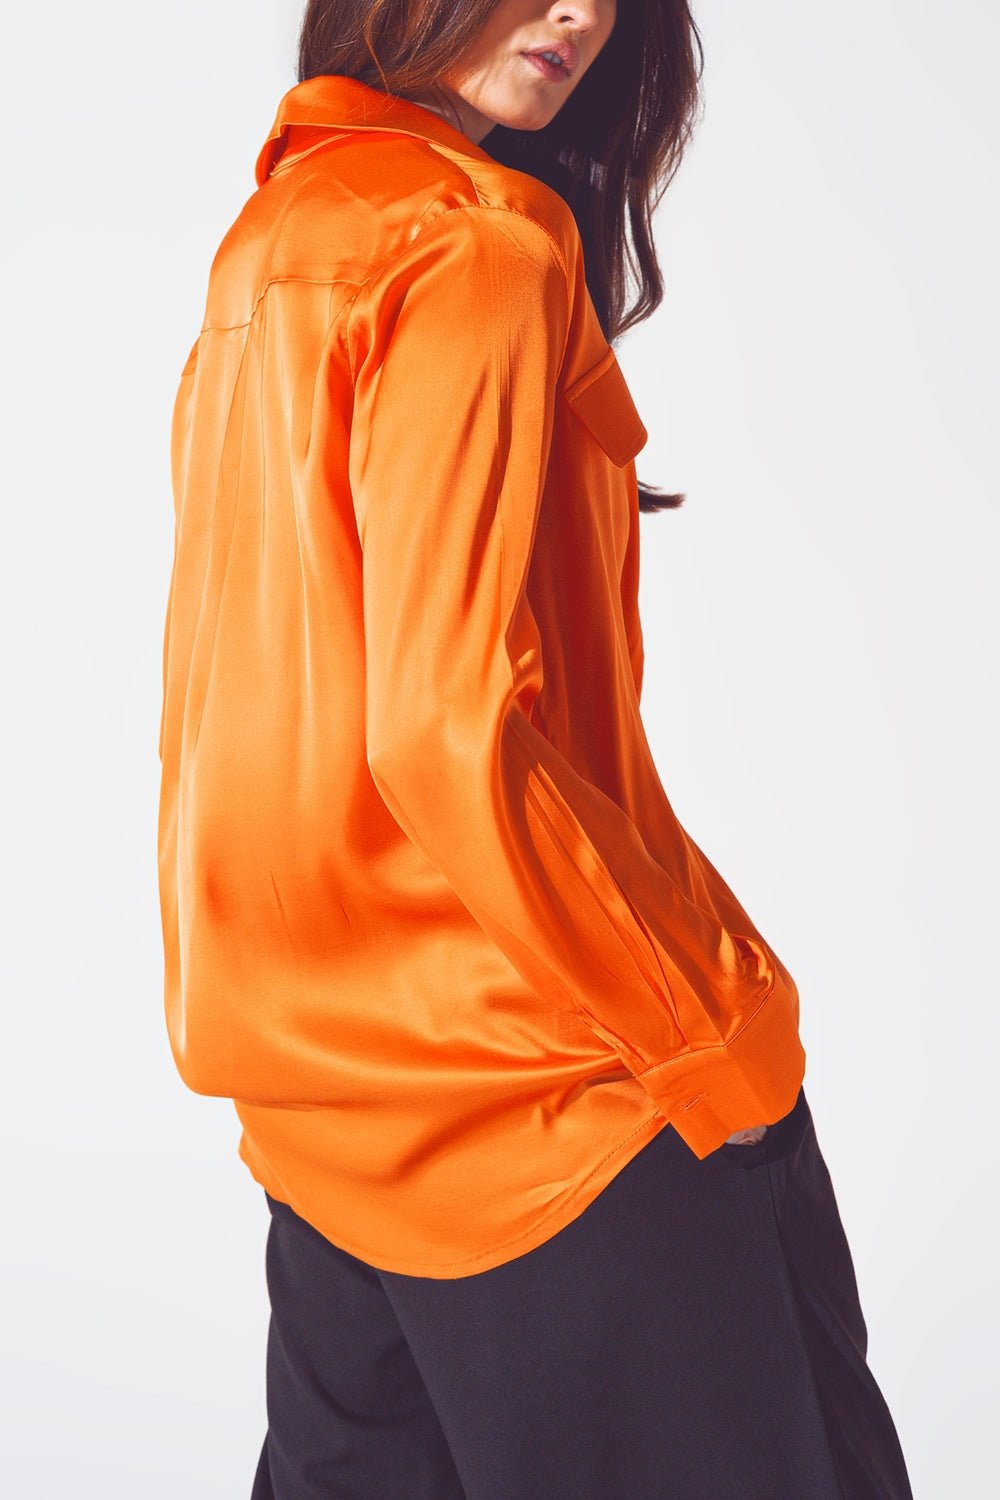 Rayon Relaxed Shirt in Bright Orange - Mack & Harvie